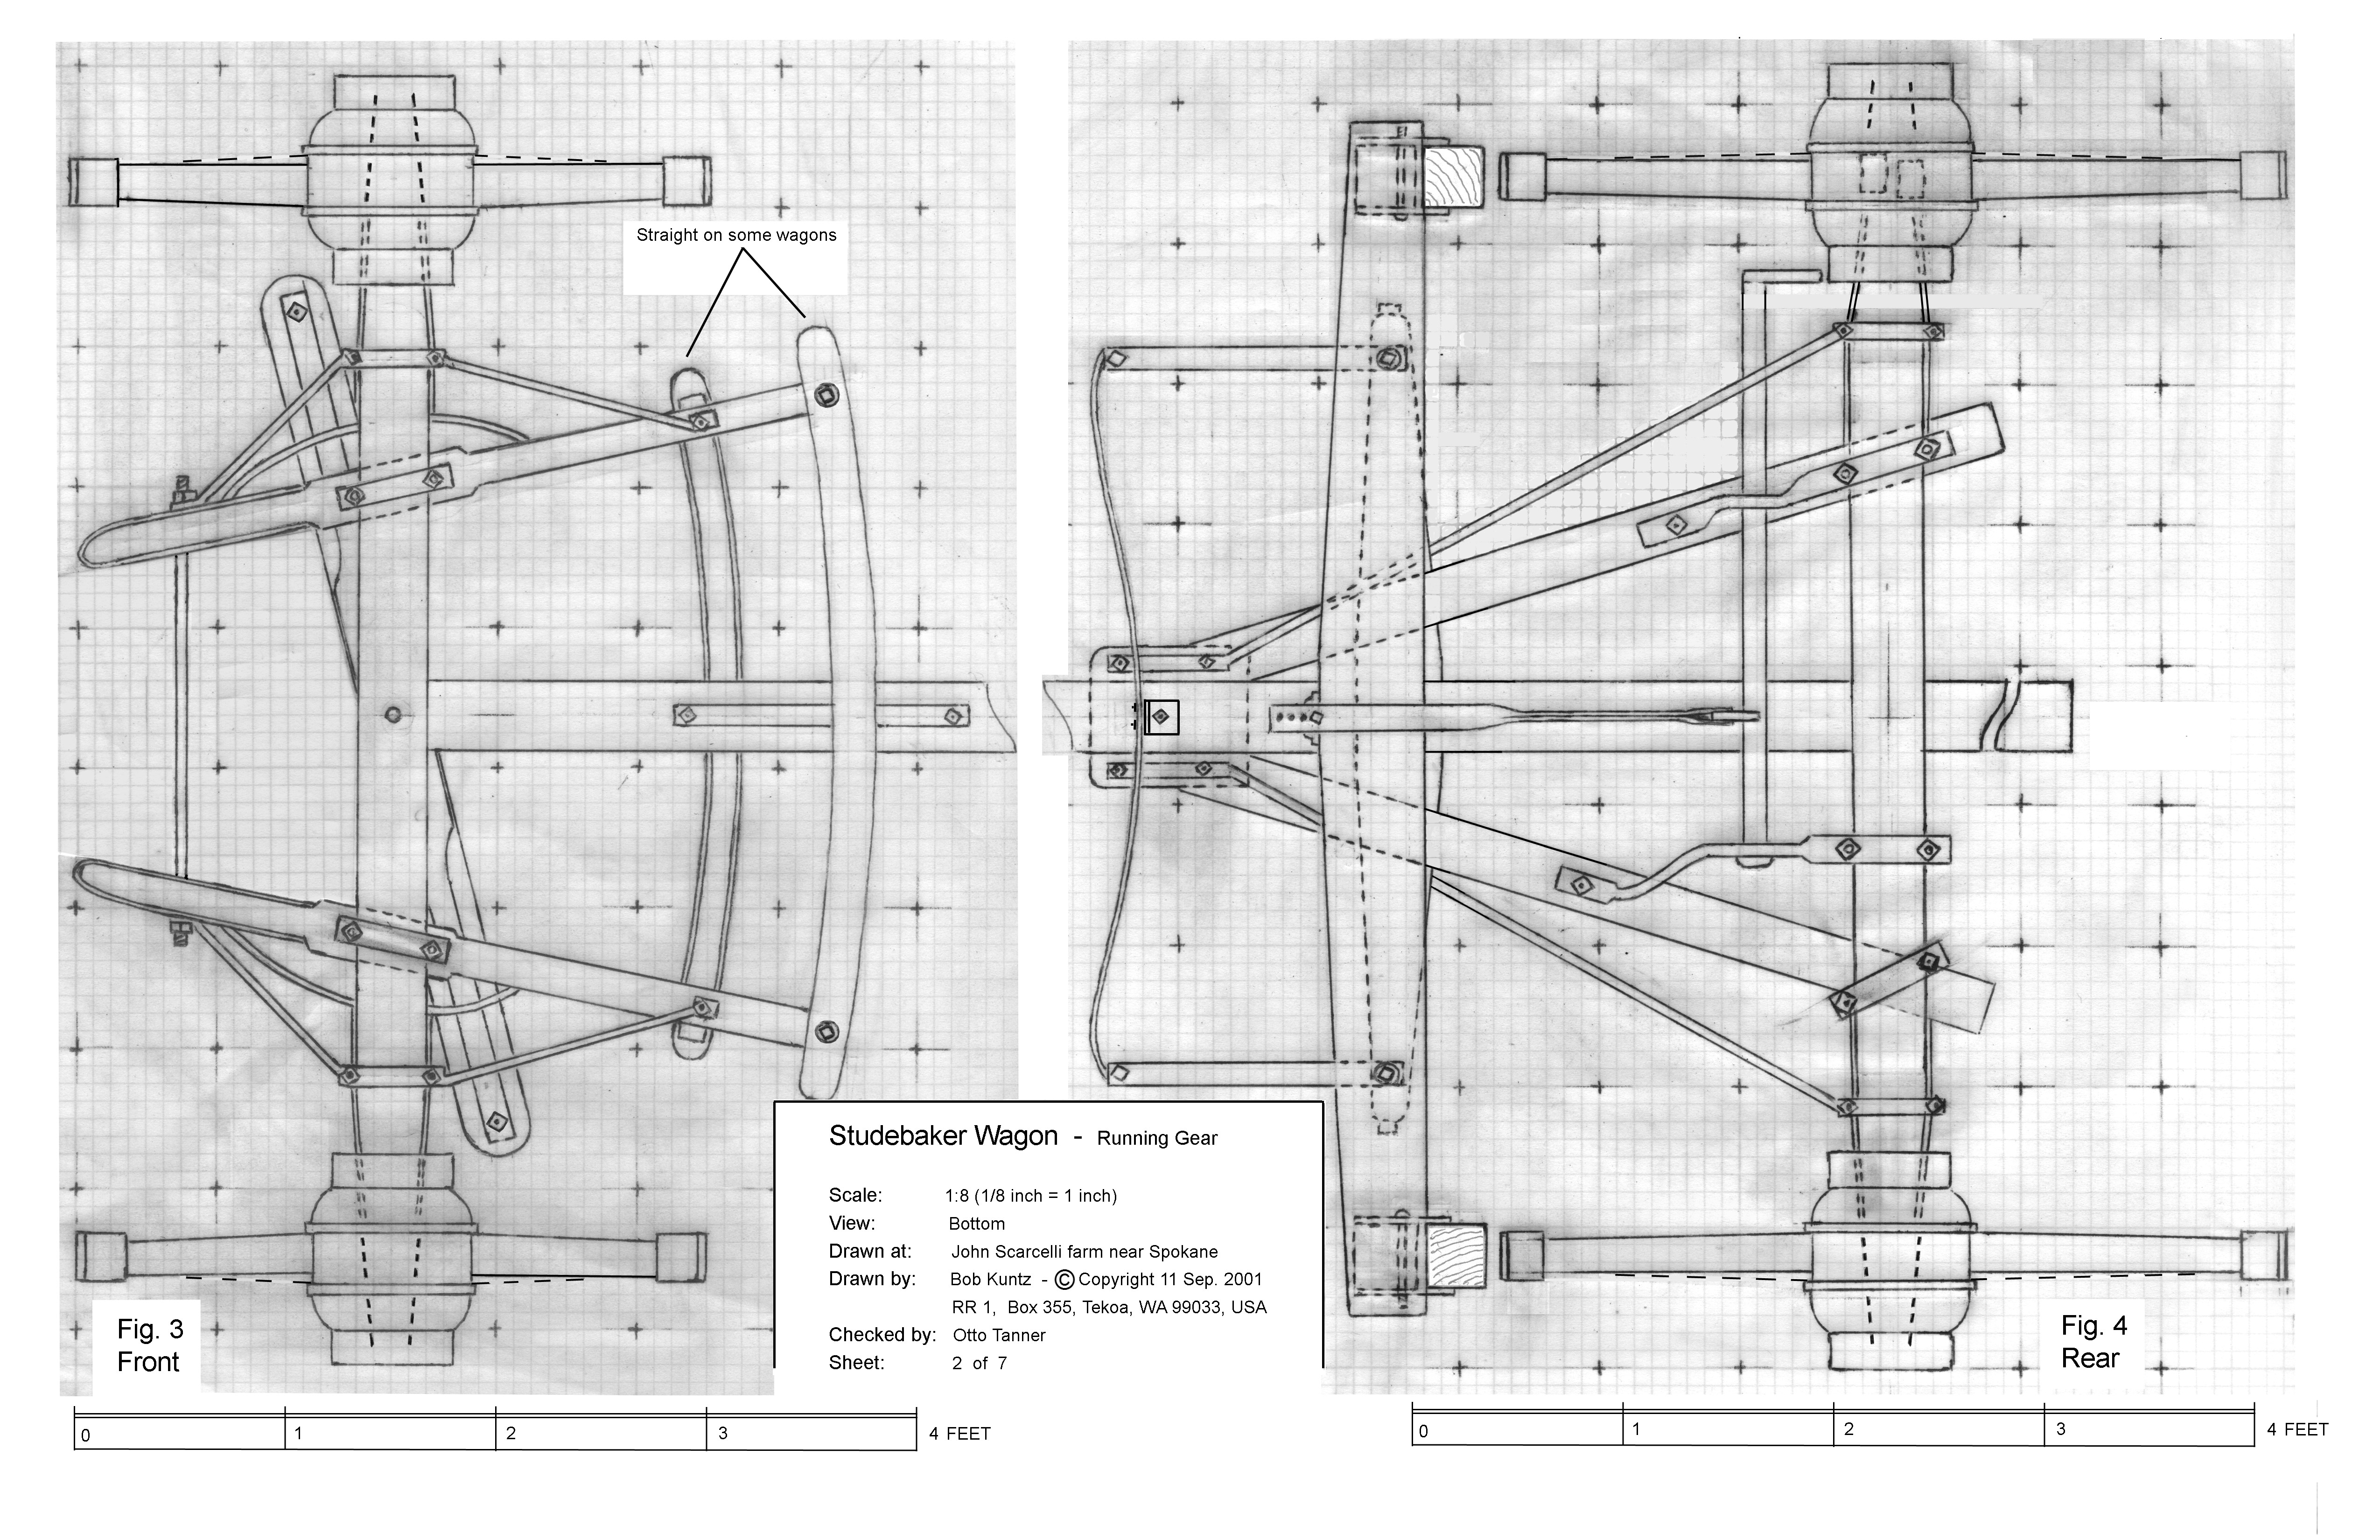 Studebaker Wagon Plans - Sheet 2 